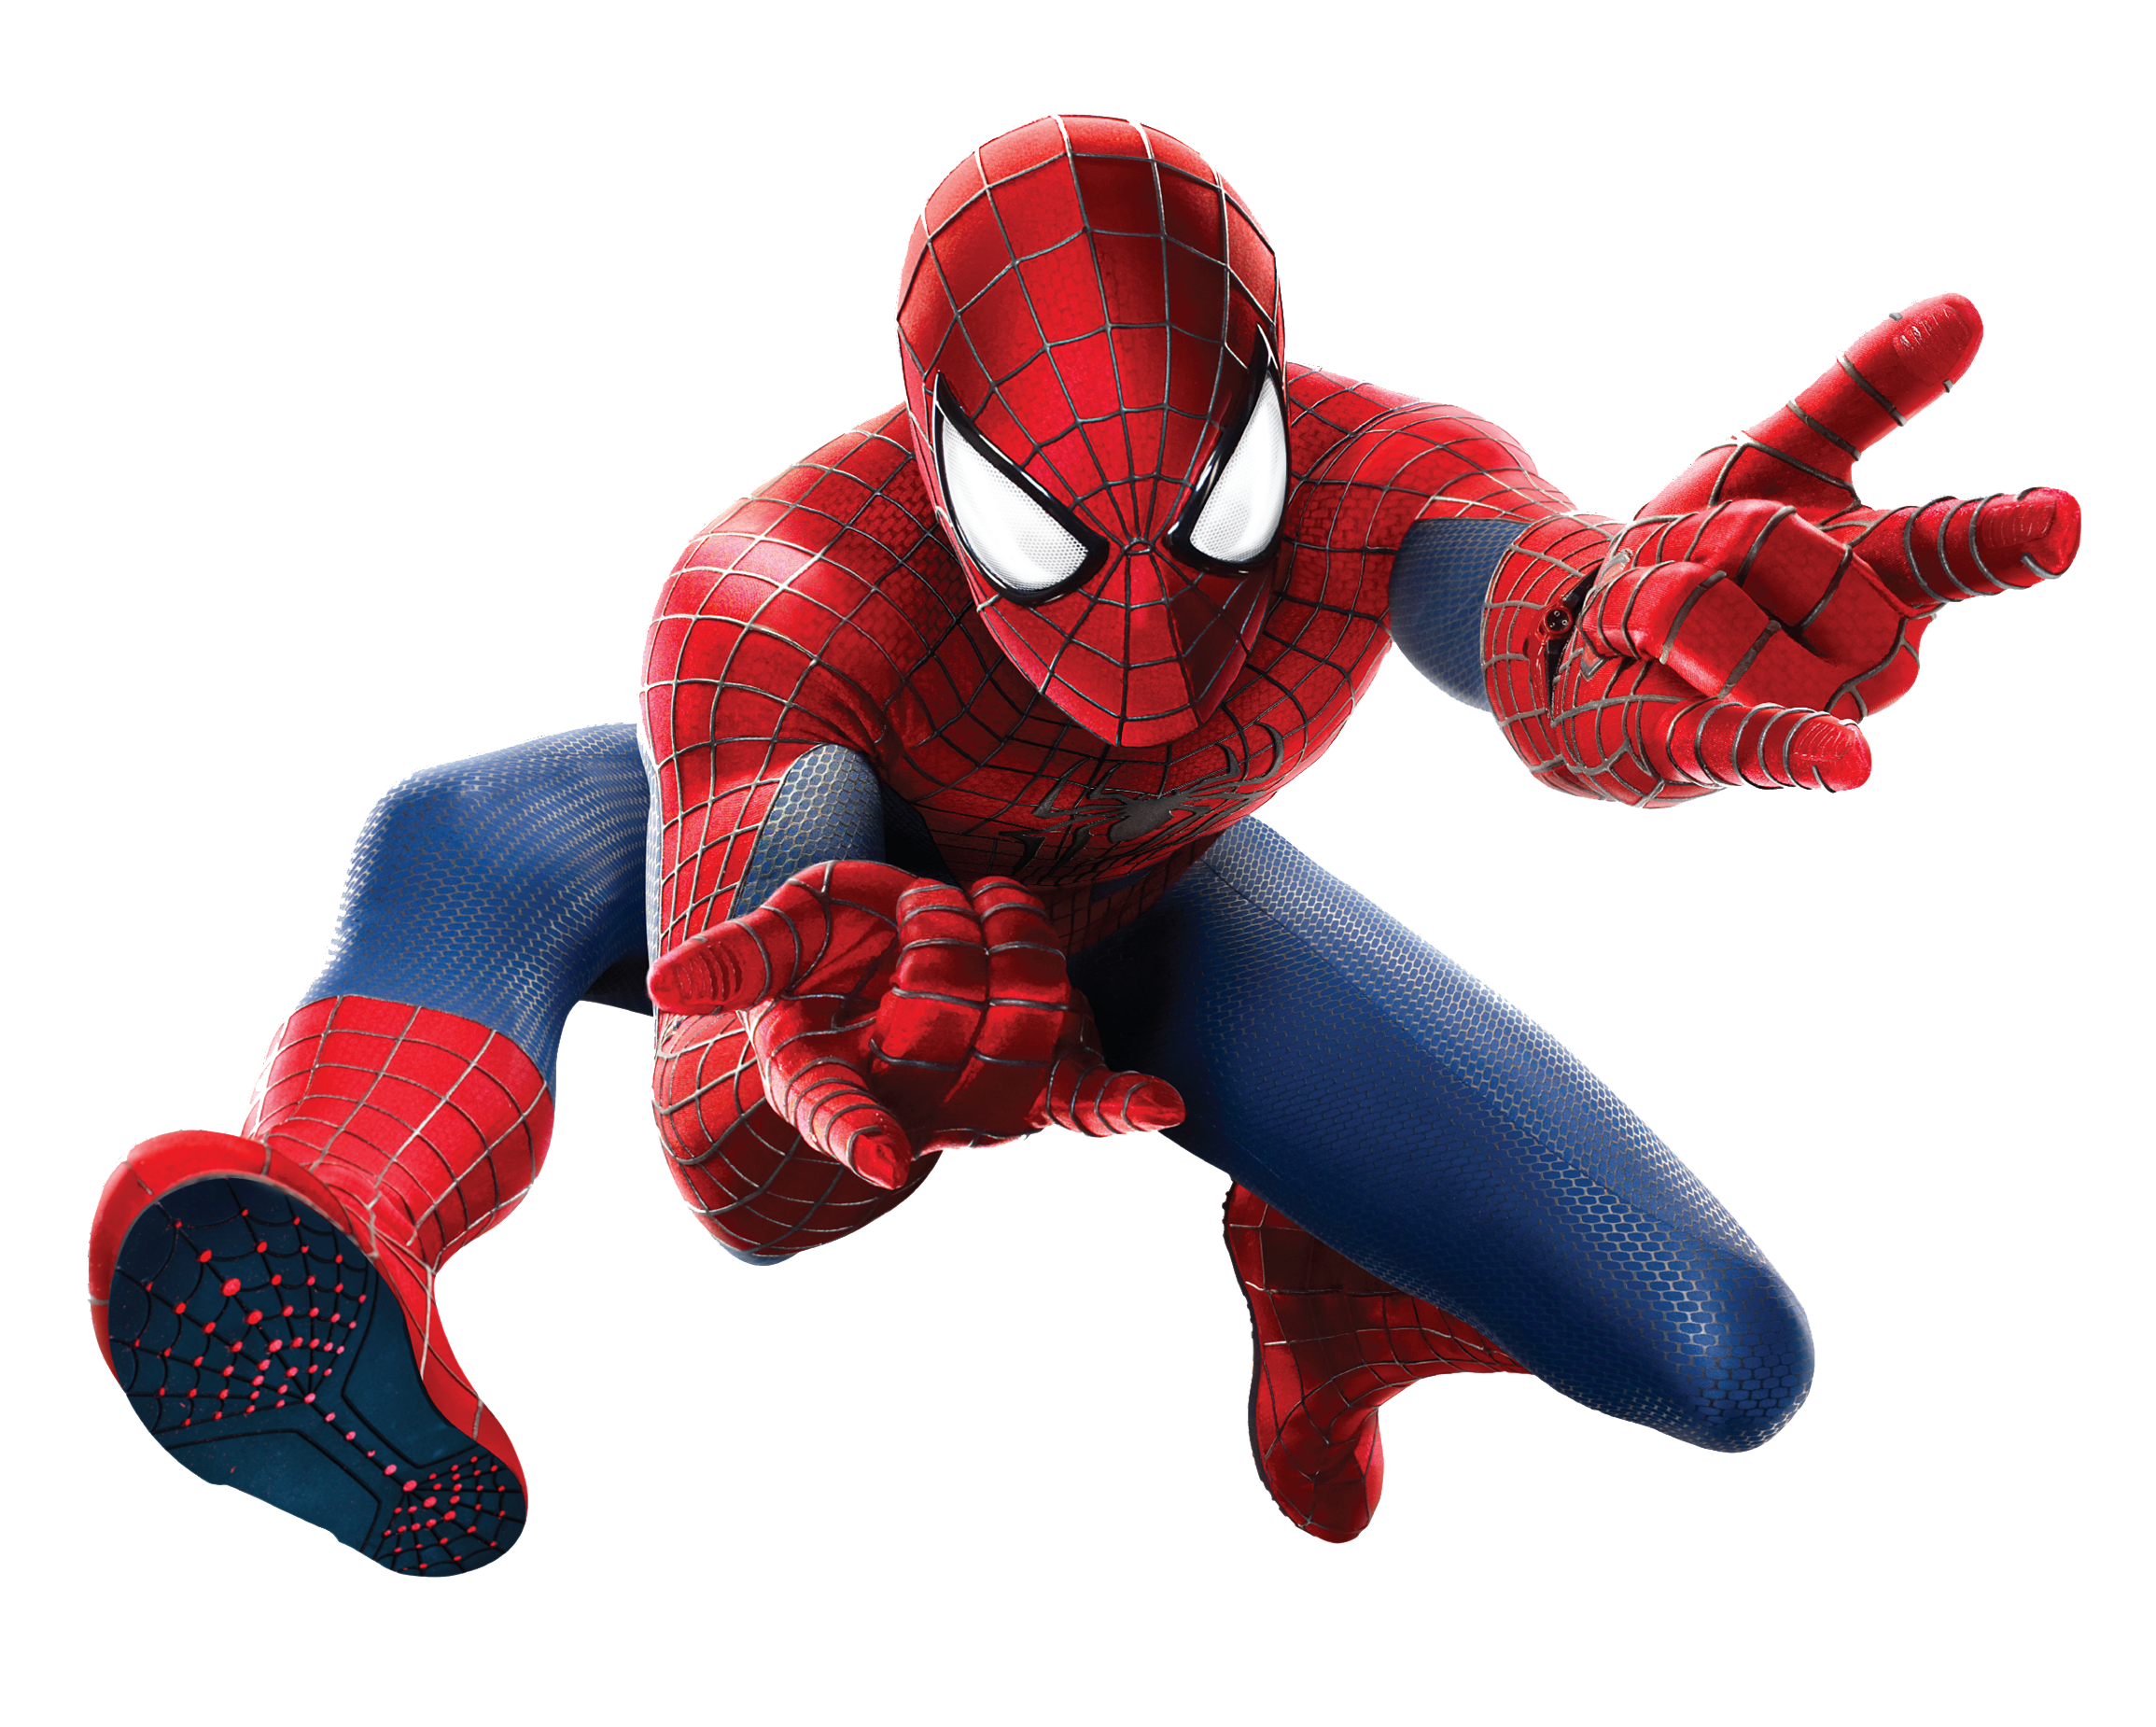 Spiderman Logo PNG Transparent Spiderman Logo.PNG Images. | PlusPNG